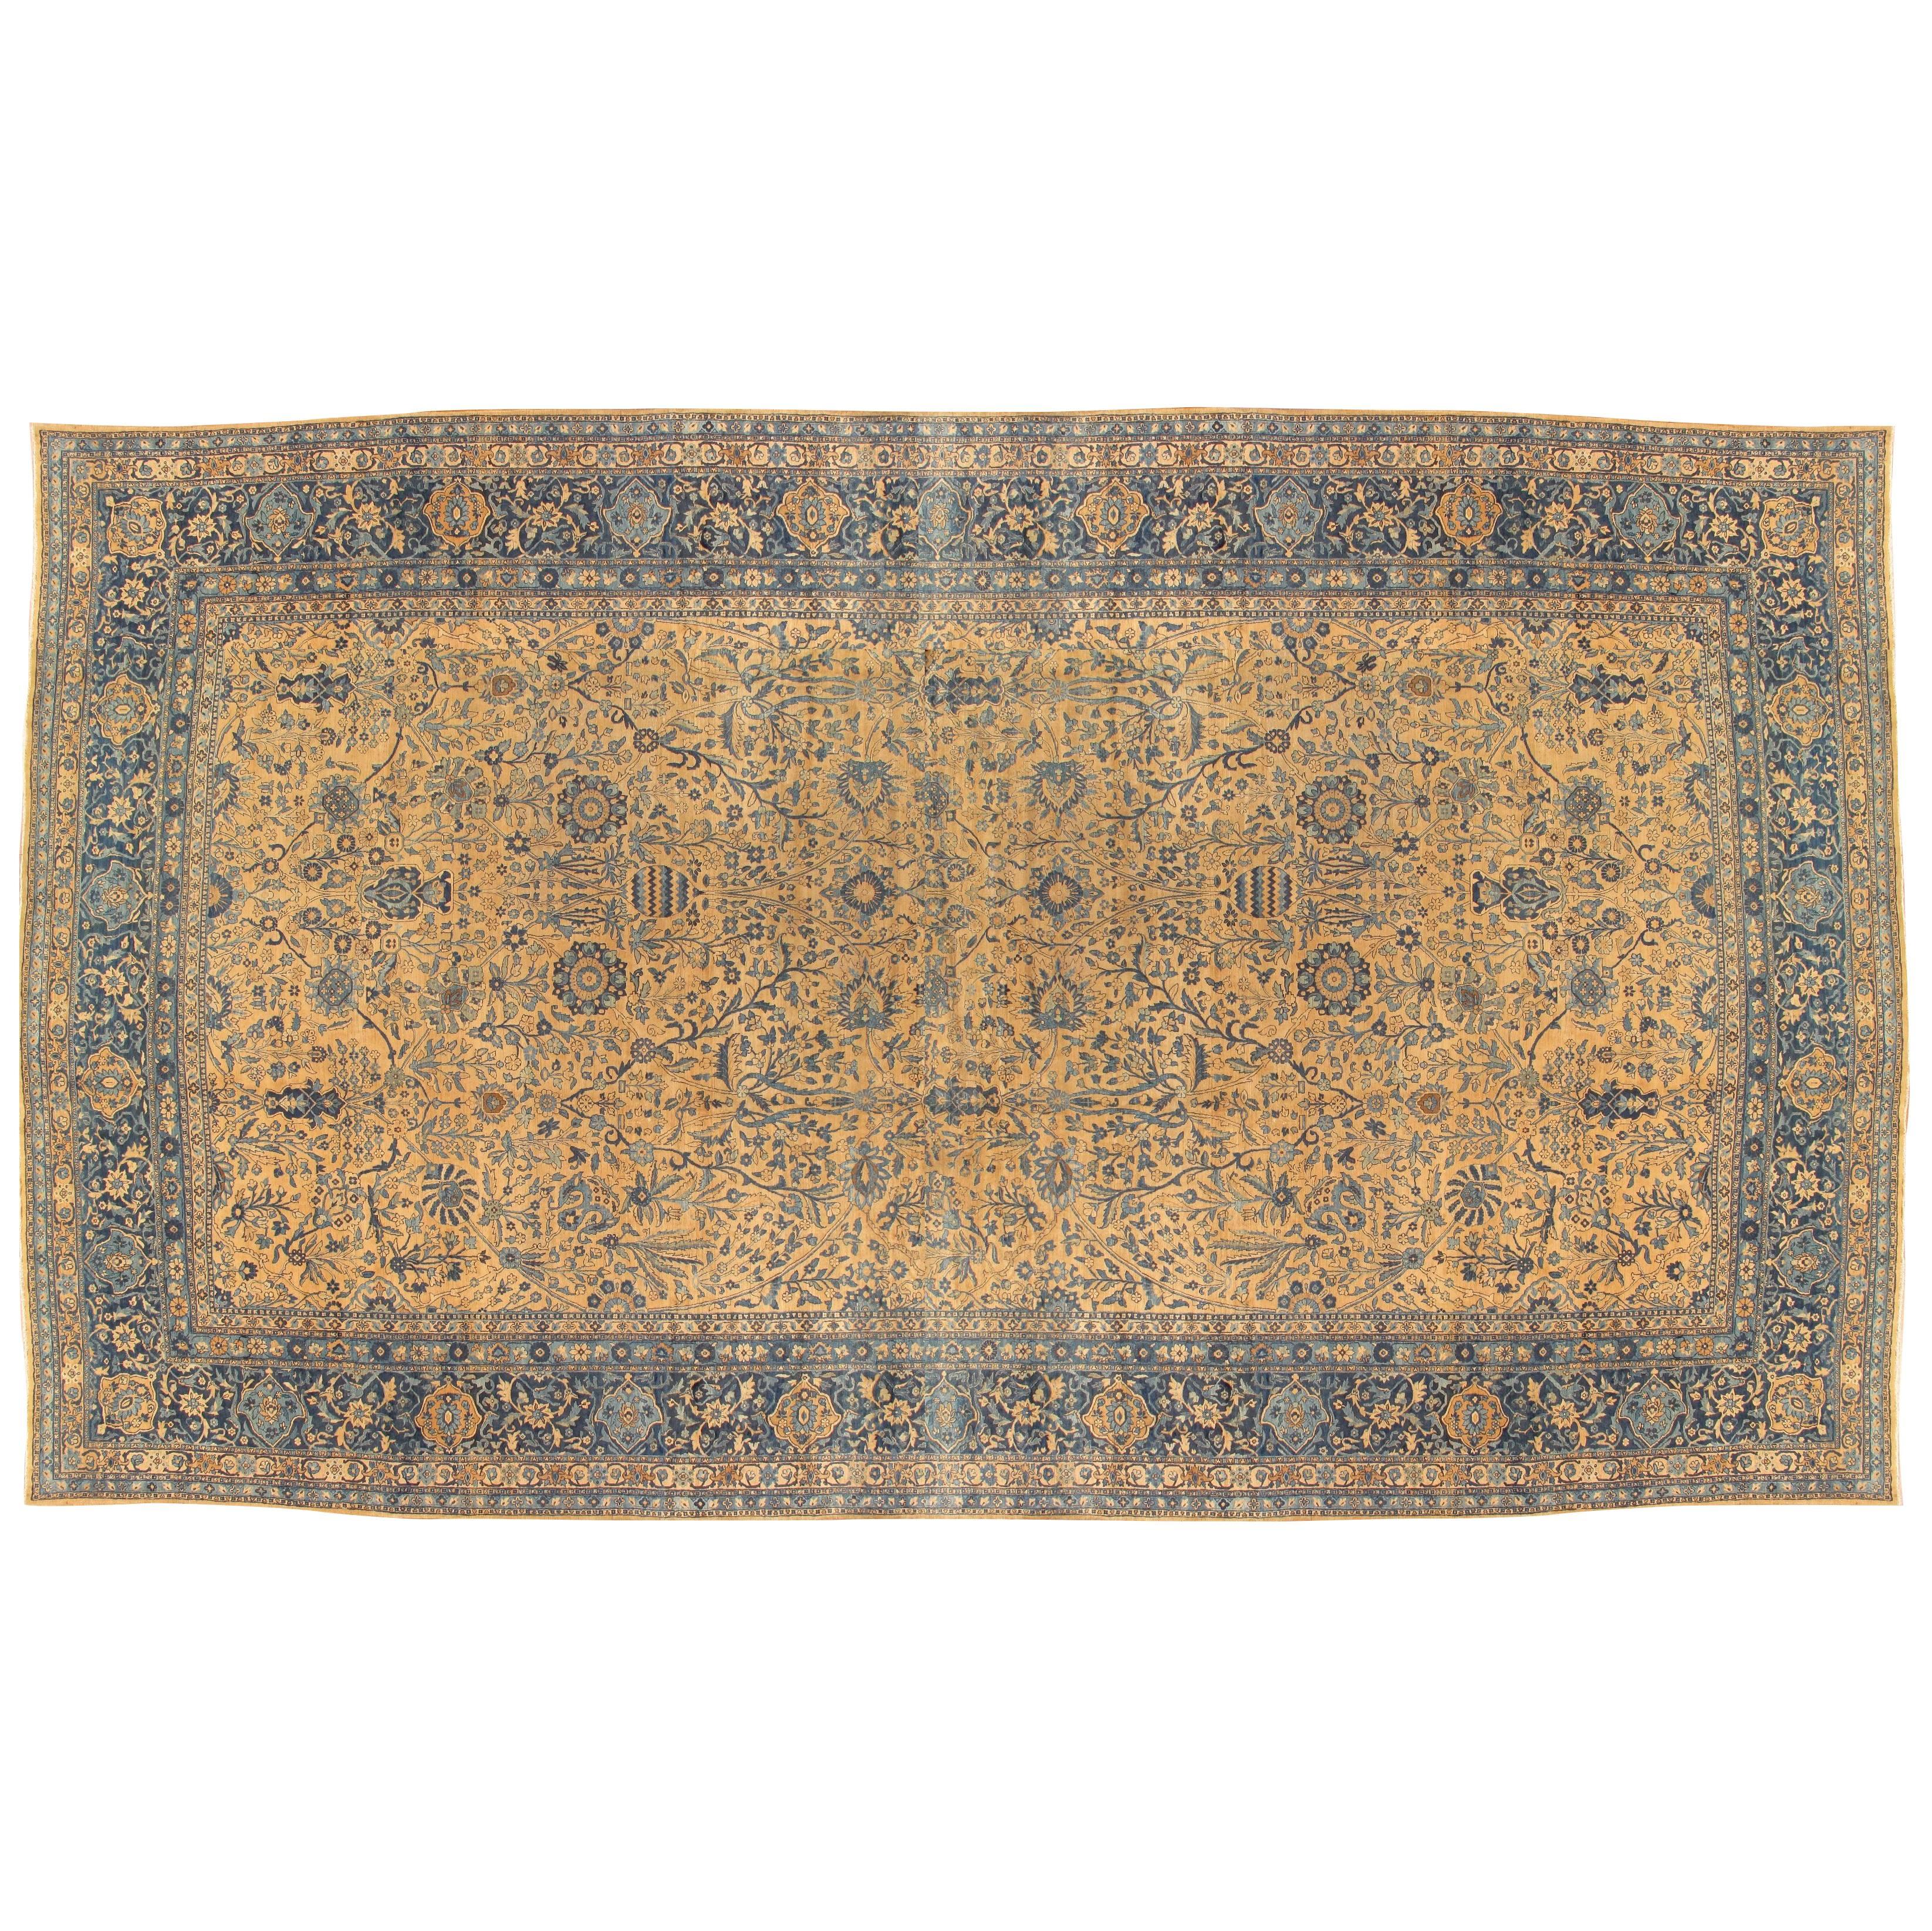 Antique Lavar Kerman Carpet, Fine Persian Oriental Rug Light Blue, Gold and Navy